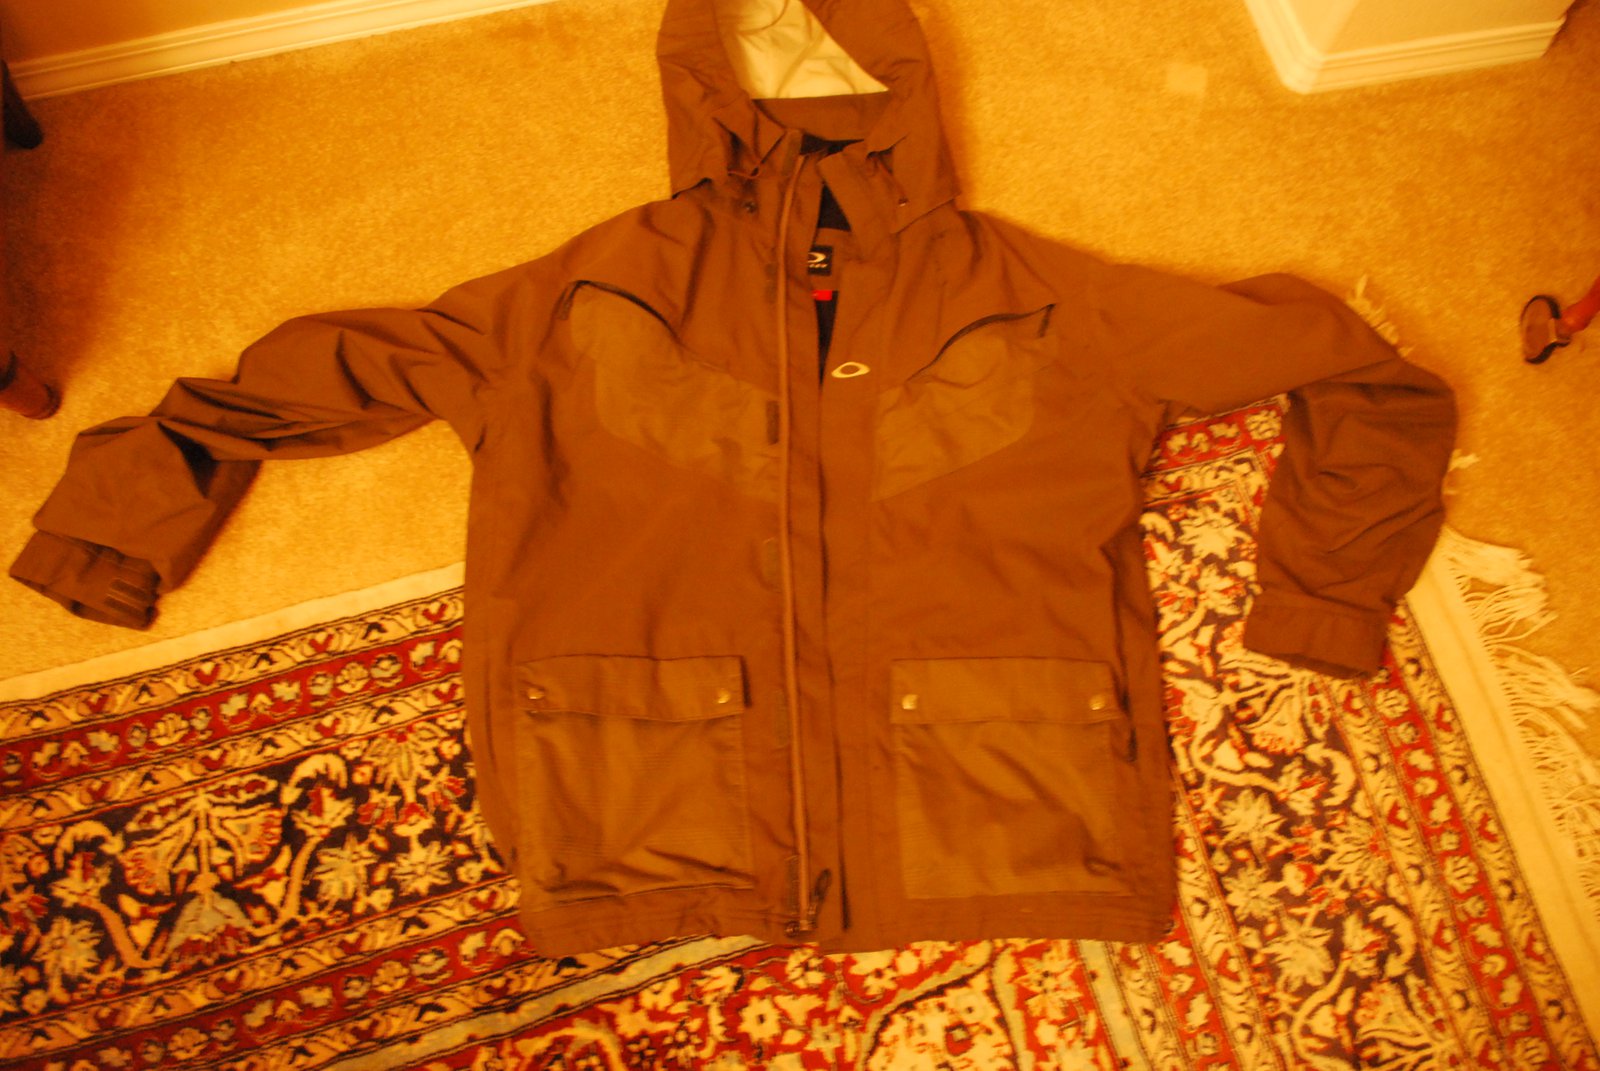 Wingman jacket